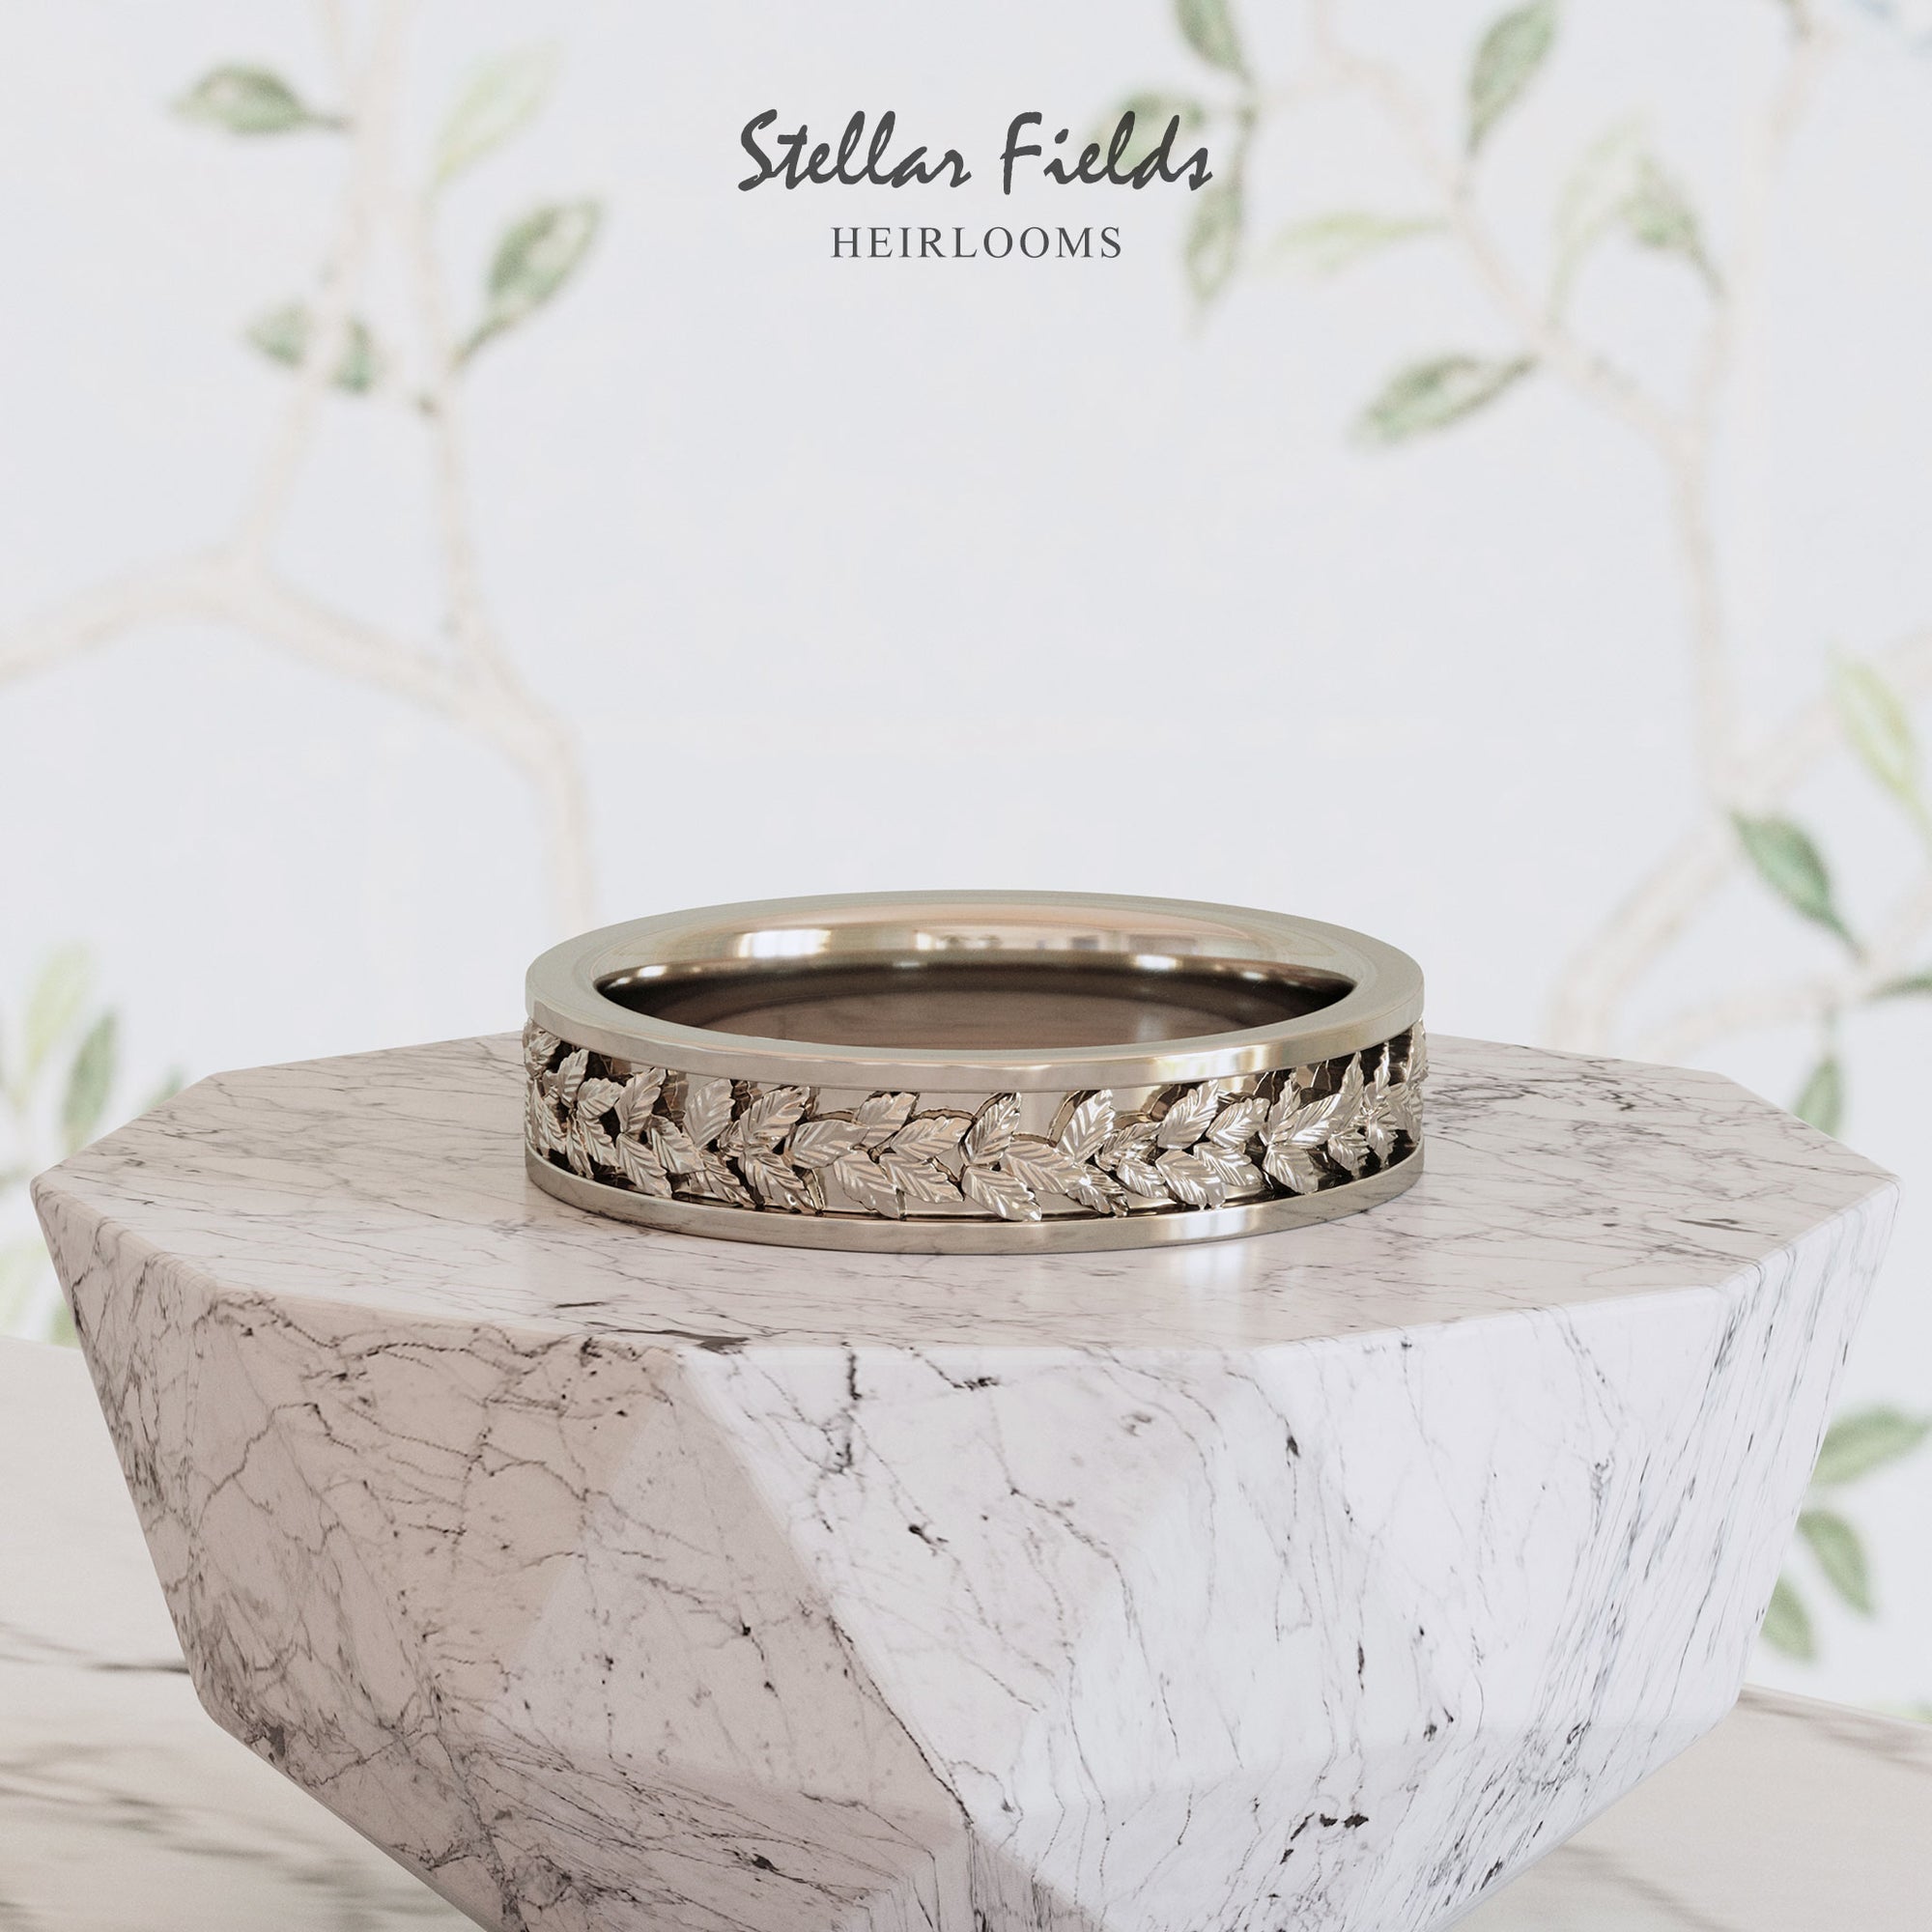 Laurel Leaf Wedding Ring Beautiful Flat Profile Band Platinum Stellar Fields Jewelry